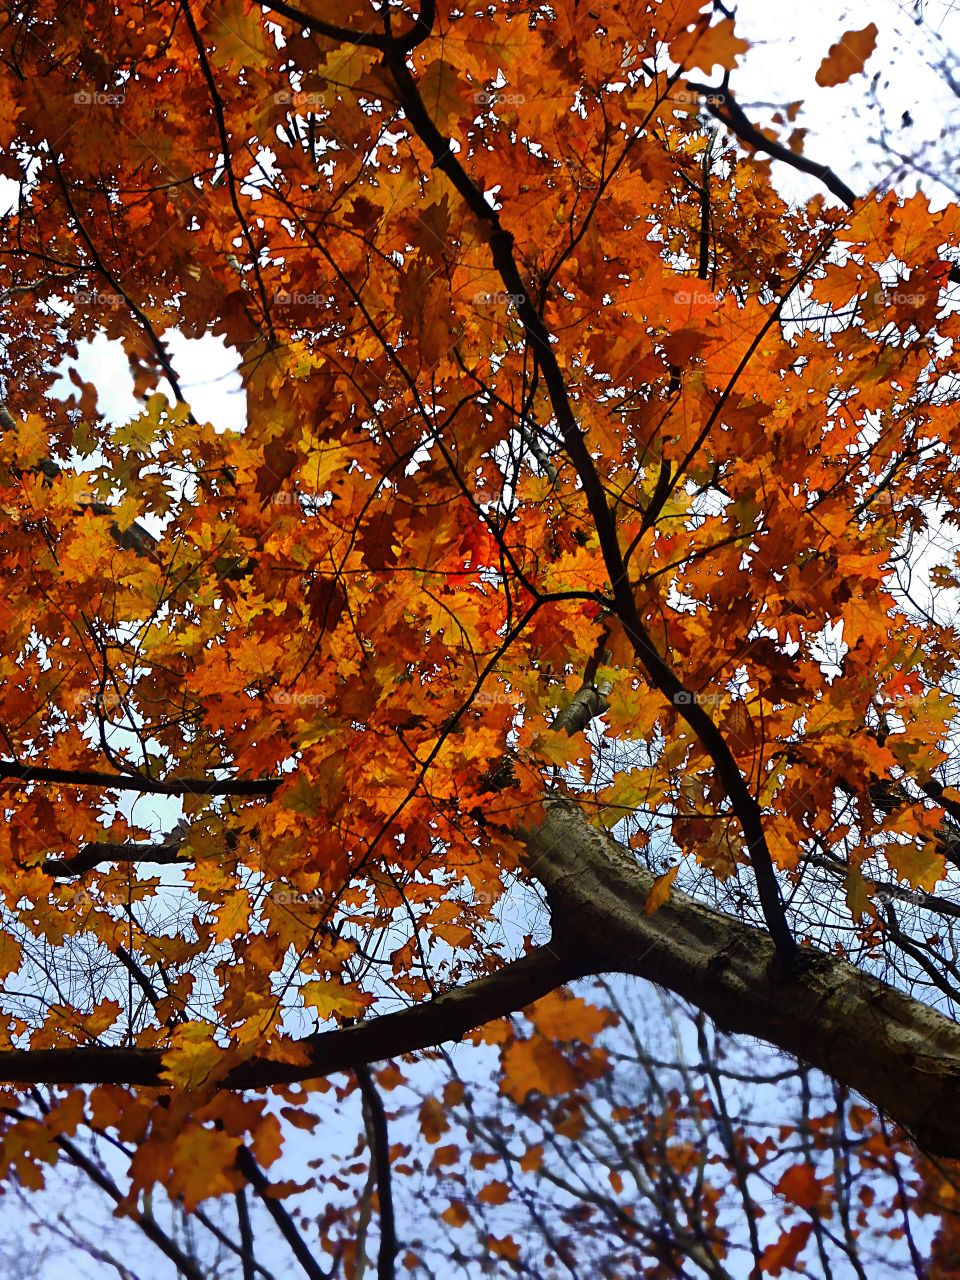 Upward View of the Fall Tree